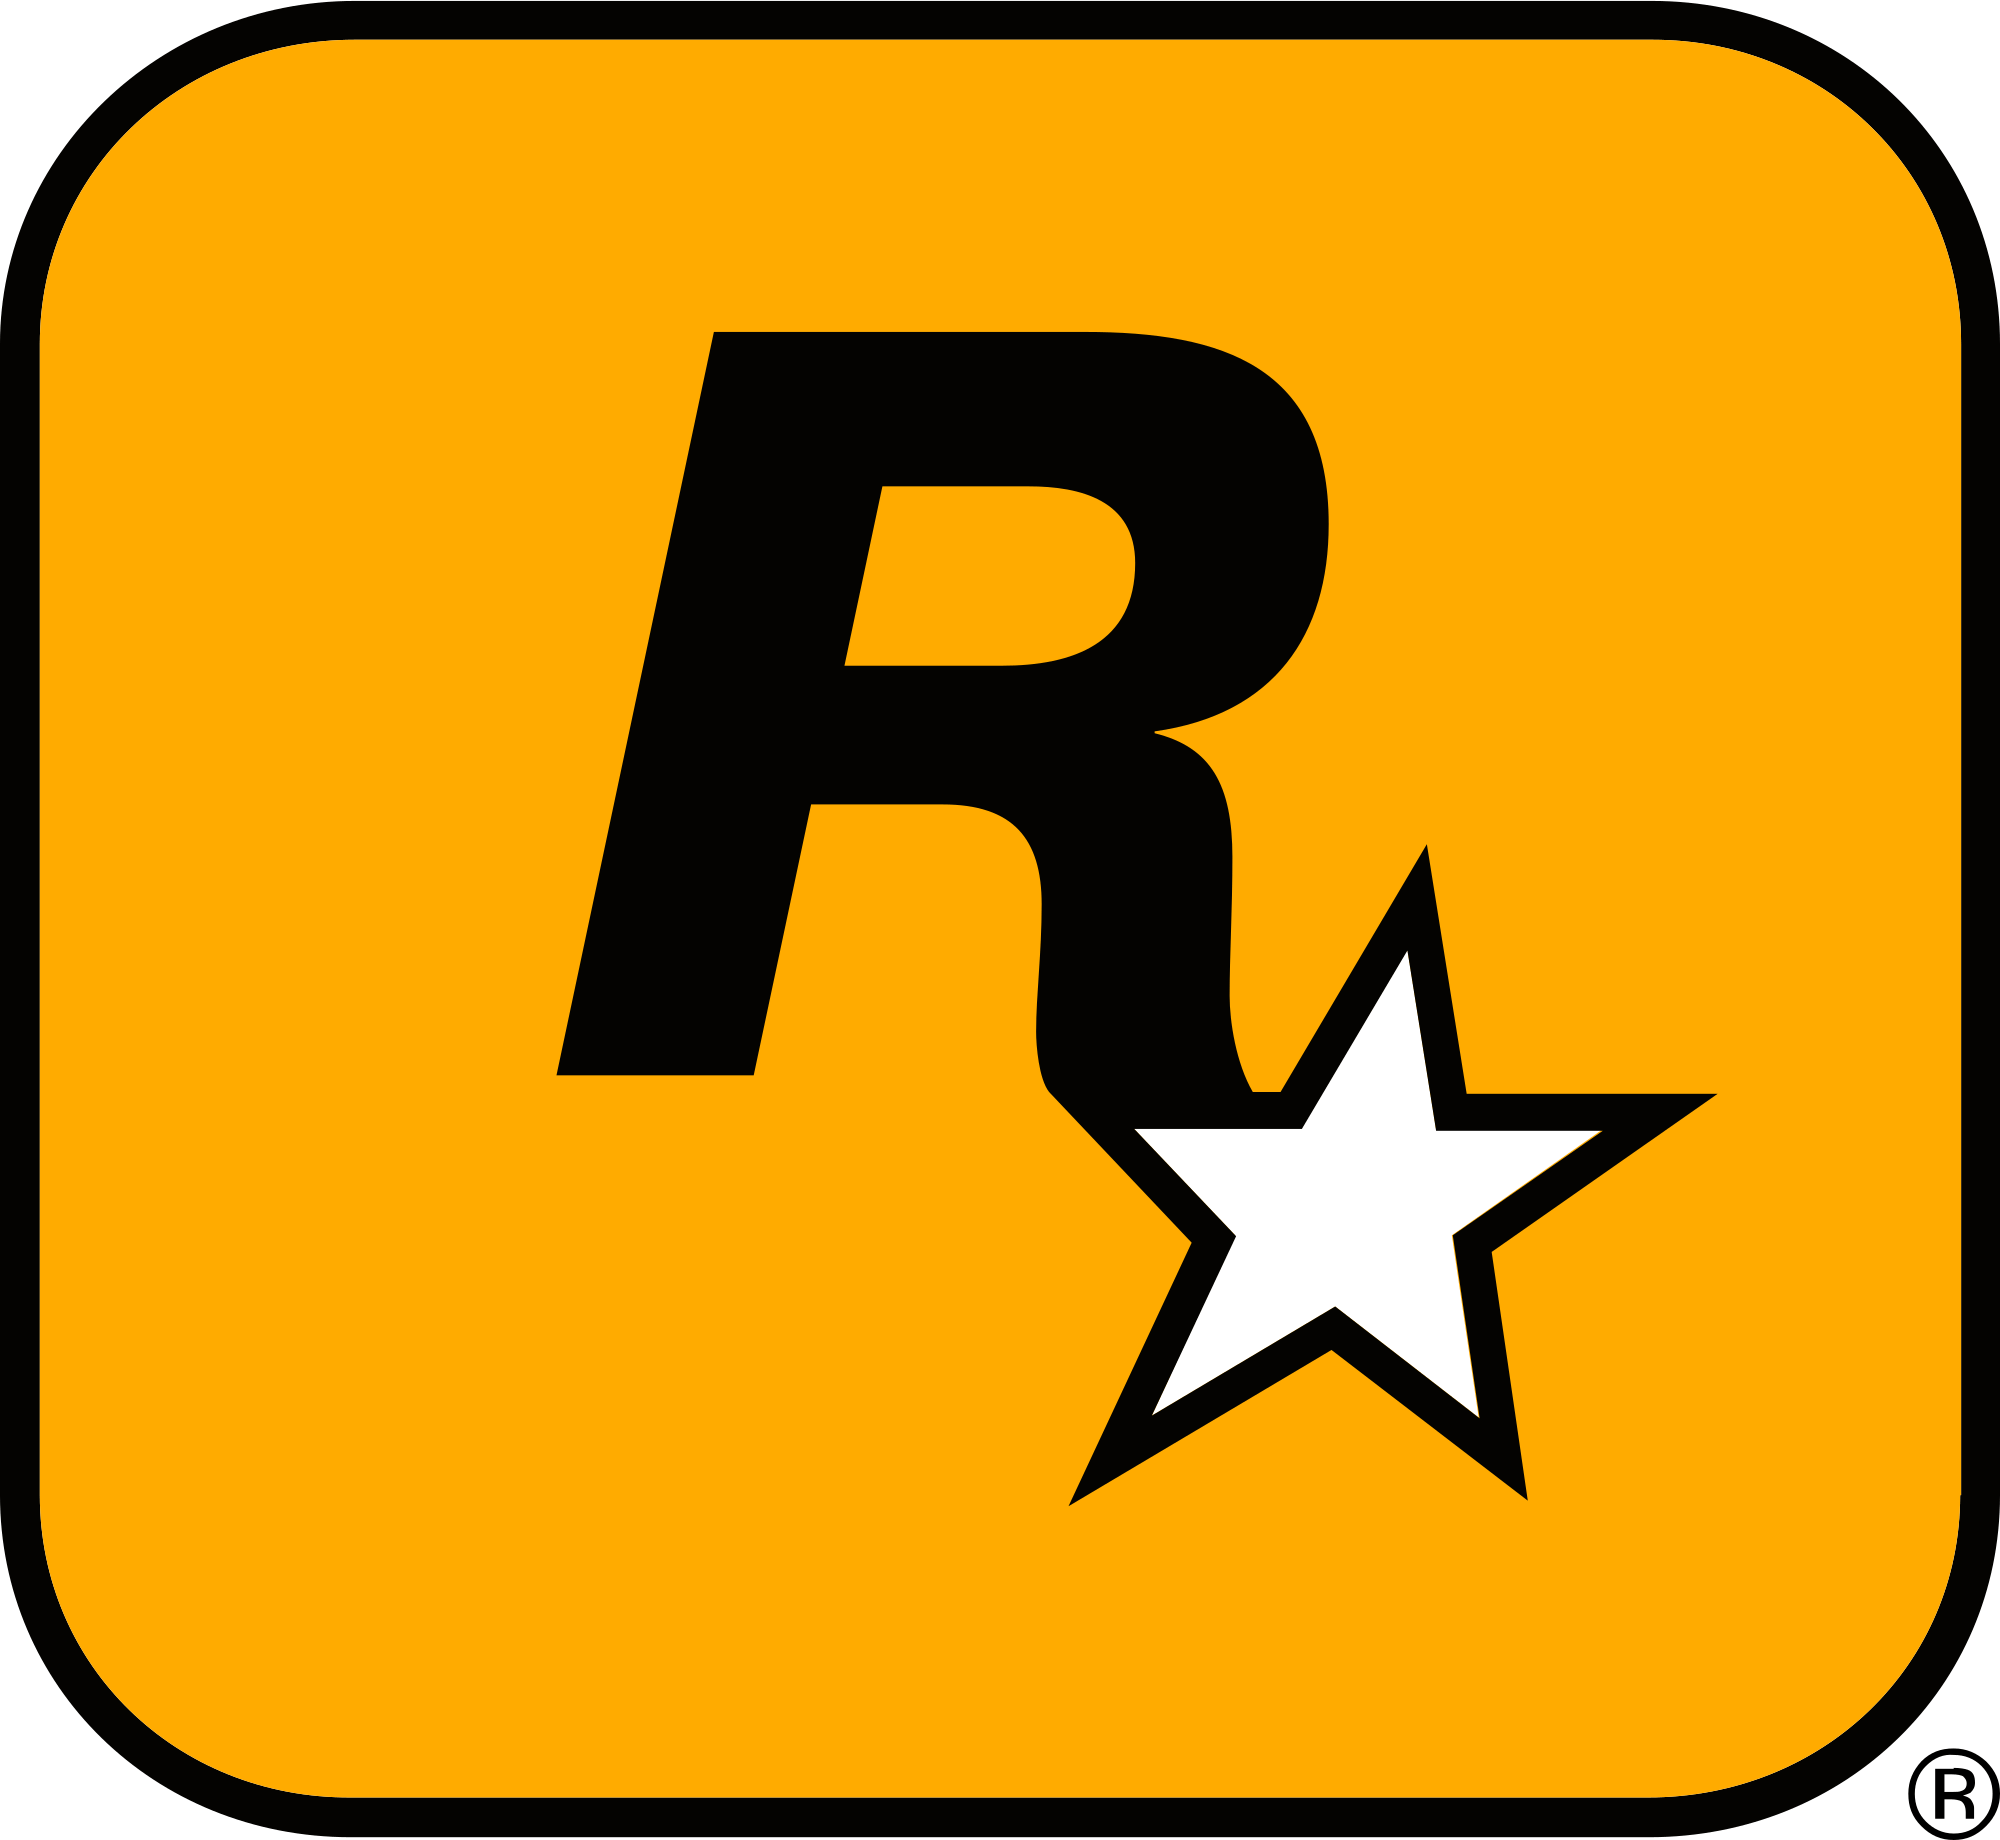 All Game Logo - Rockstar Games